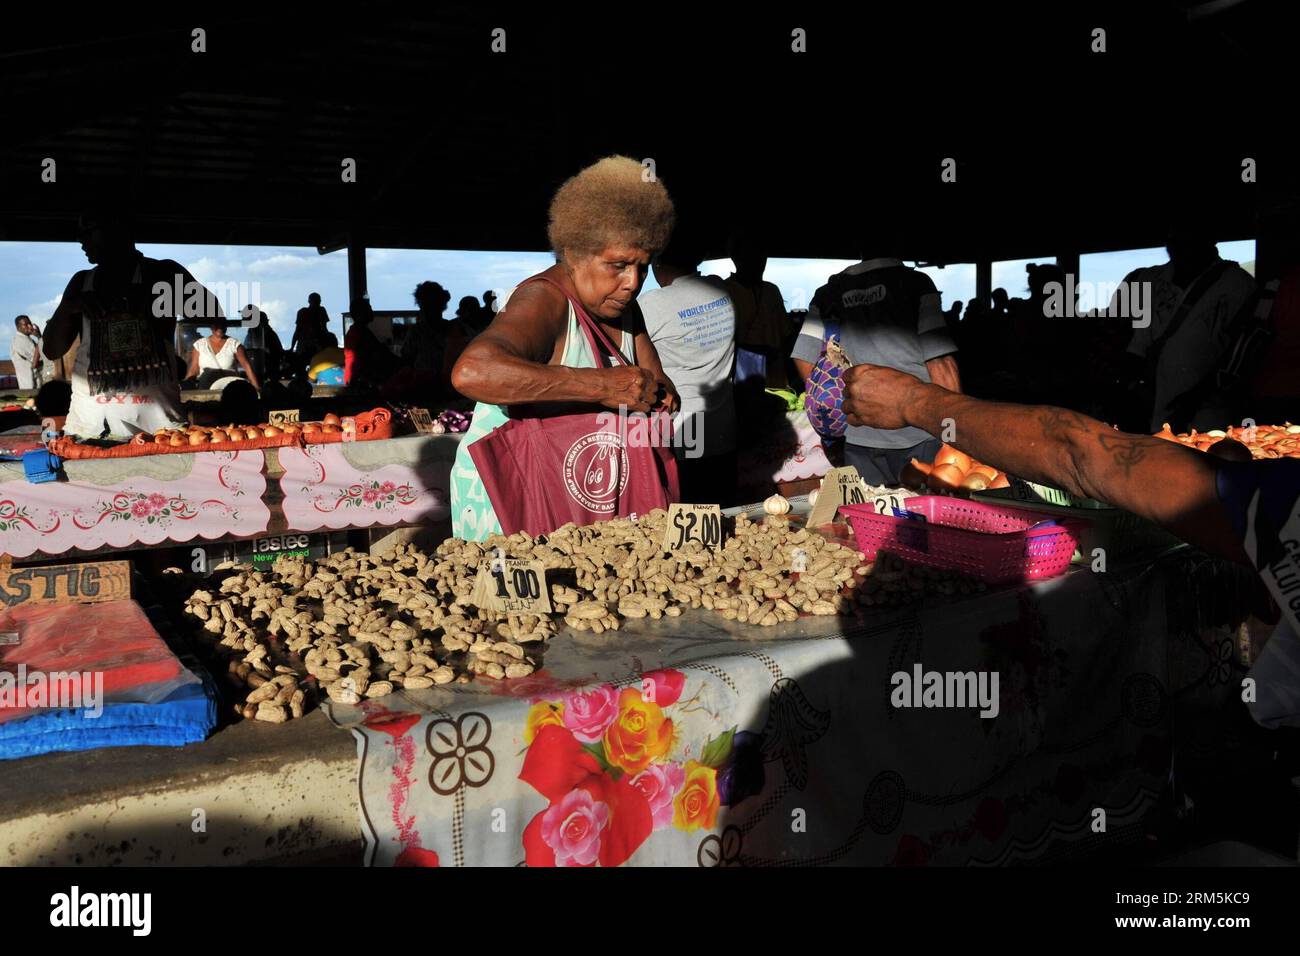 Bildnummer: 60679969  Datum: 28.10.2013  Copyright: imago/Xinhua (131103) -- HONIARA, Oct. 28, 2013 (Xinhua) -- buy goods at a market in Honiara, capital of the Solomon Islands, Oct. 28, 2013. (Xinhua/Gao Junxian) (dzl) SOLOMEN ISLANDS-HONIARA-LIFE PUBLICATIONxNOTxINxCHN Gesellschaft x2x xkg 2013 quer o0 Nüsse Erdnüsse Markt Salomonen     60679969 Date 28 10 2013 Copyright Imago XINHUA  Honiara OCT 28 2013 XINHUA Buy Goods AT a Market in Honiara Capital of The Solomon Islands OCT 28 2013 XINHUA Gao  dzl  Islands Honiara Life PUBLICATIONxNOTxINxCHN Society x2x xkg 2013 horizontal o0 Nuts Peanut Stock Photo